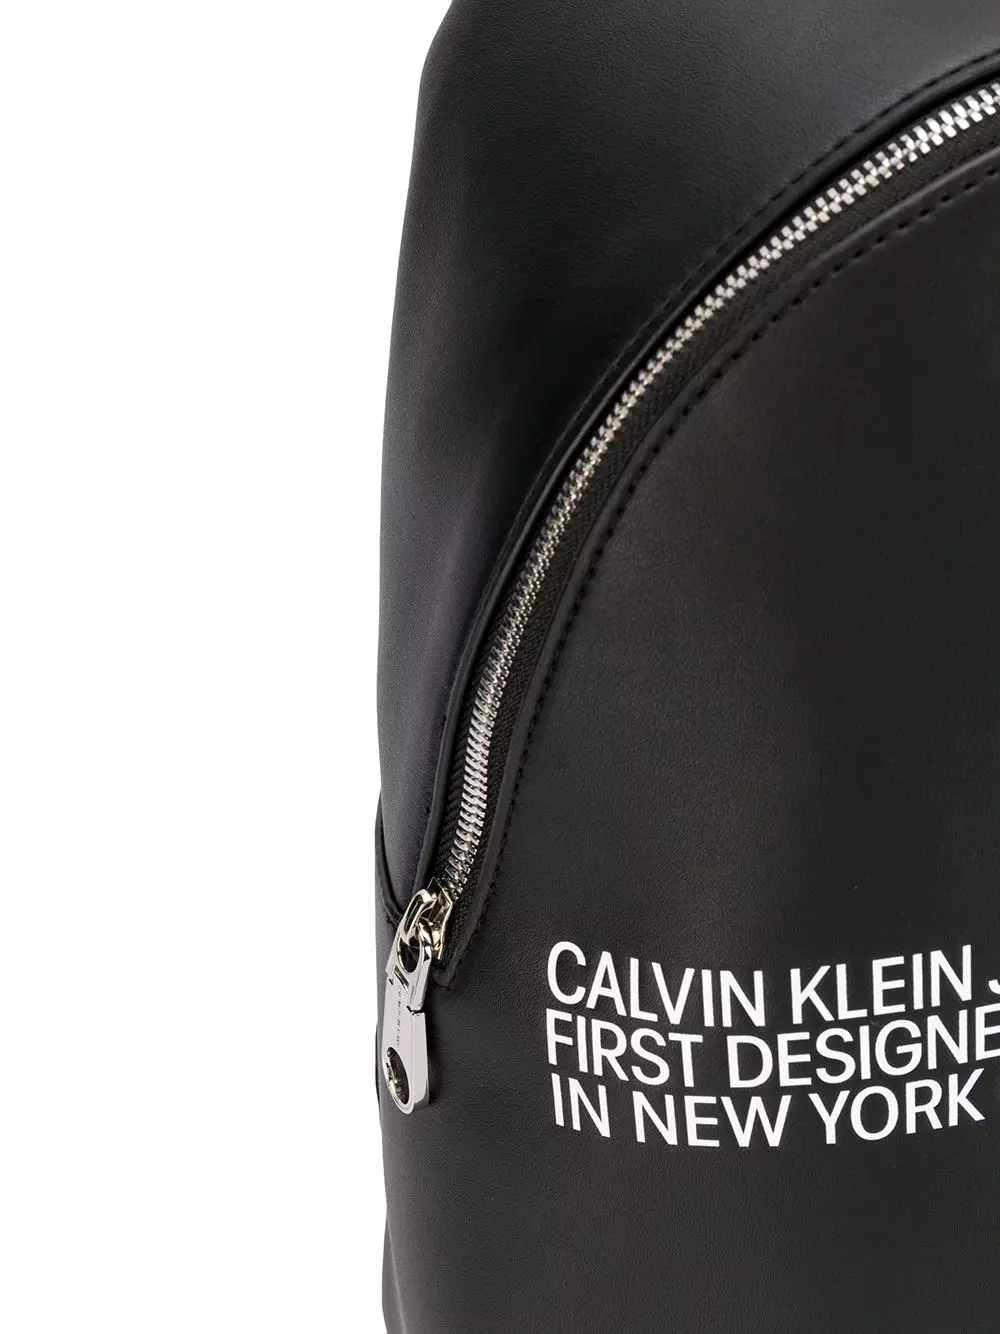 Calvin Klein Backpacks: Black Kike na Mwanaume, Leather Red, White, Yellow Kwa Monogramm na Rangi nyingine Mifuko - Backpacks 15401_19